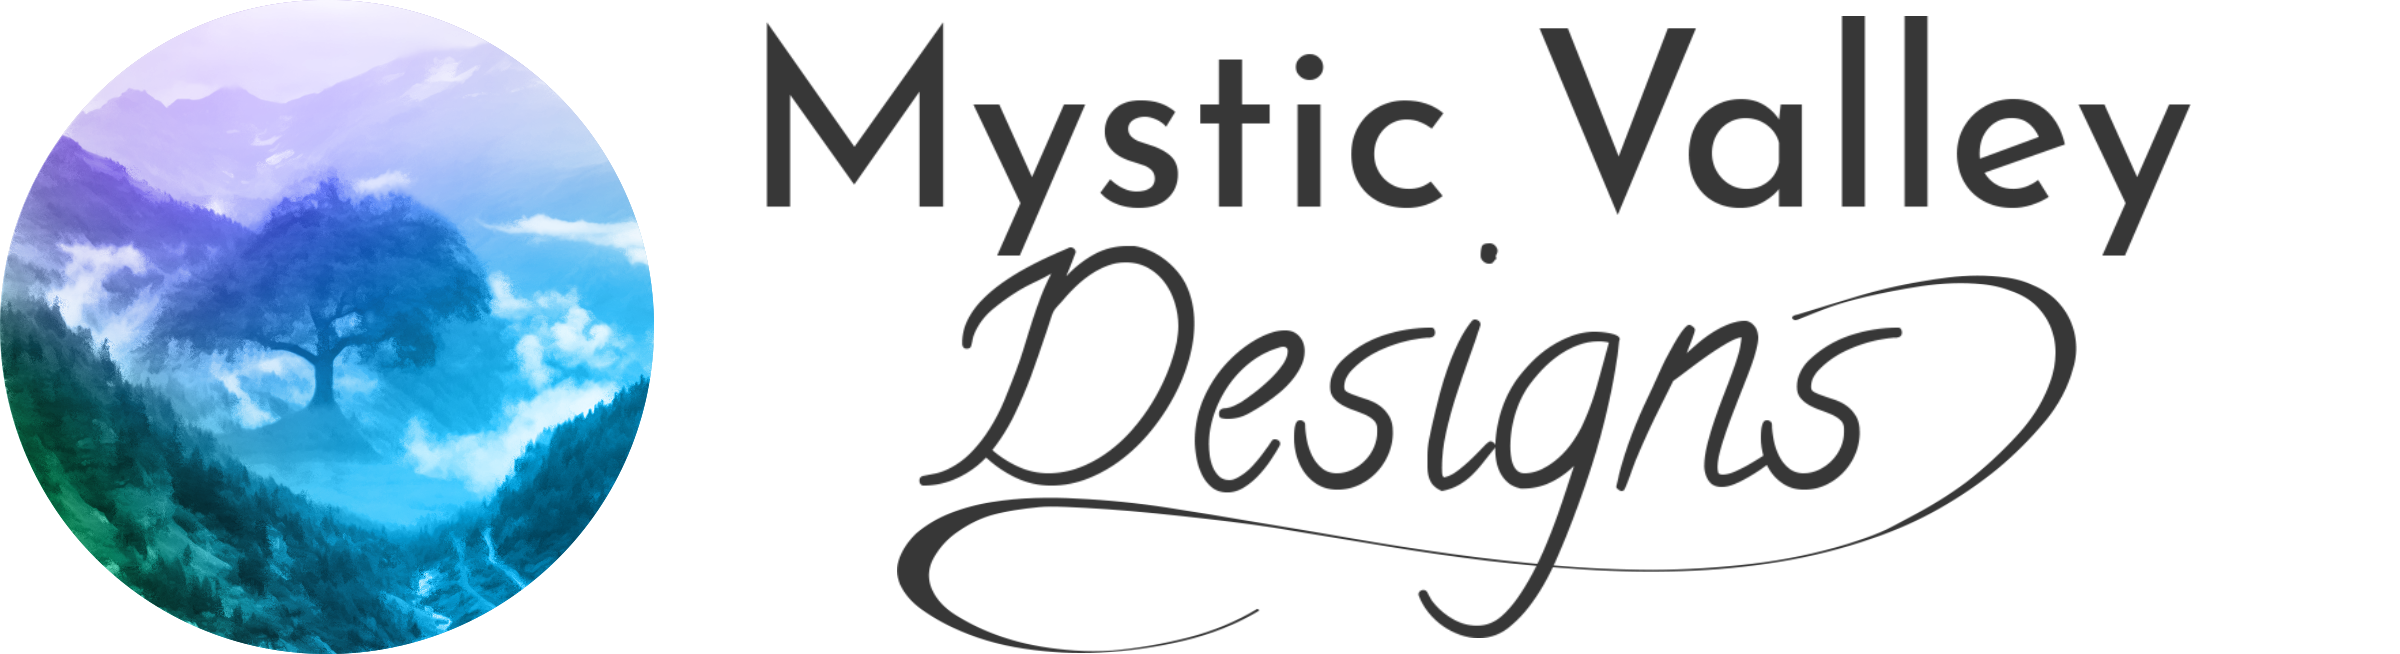 Mystic Valley Designs